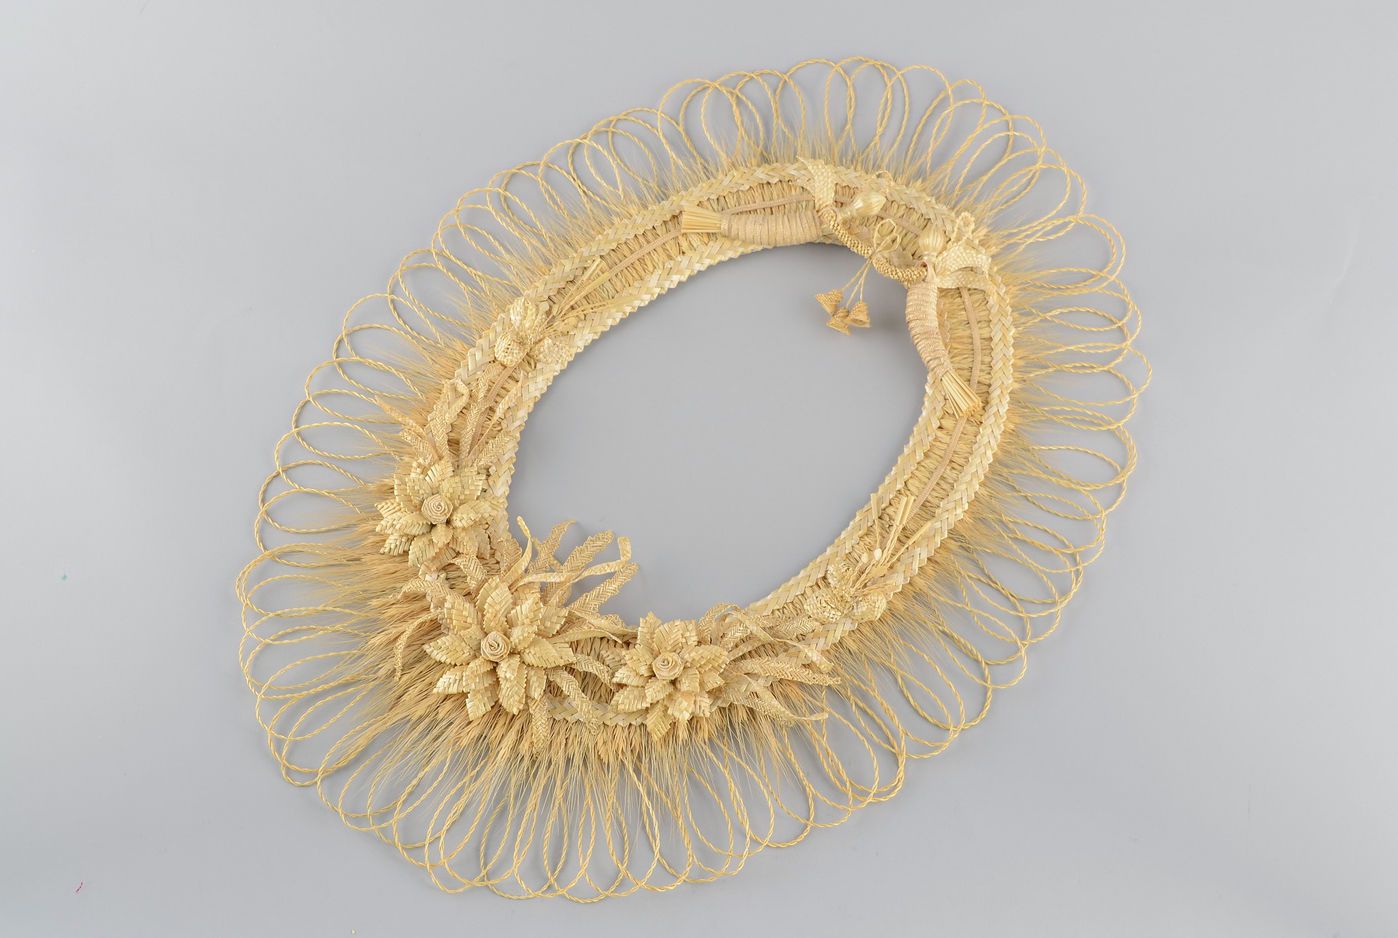 Amulet-wreath made of straw photo 1